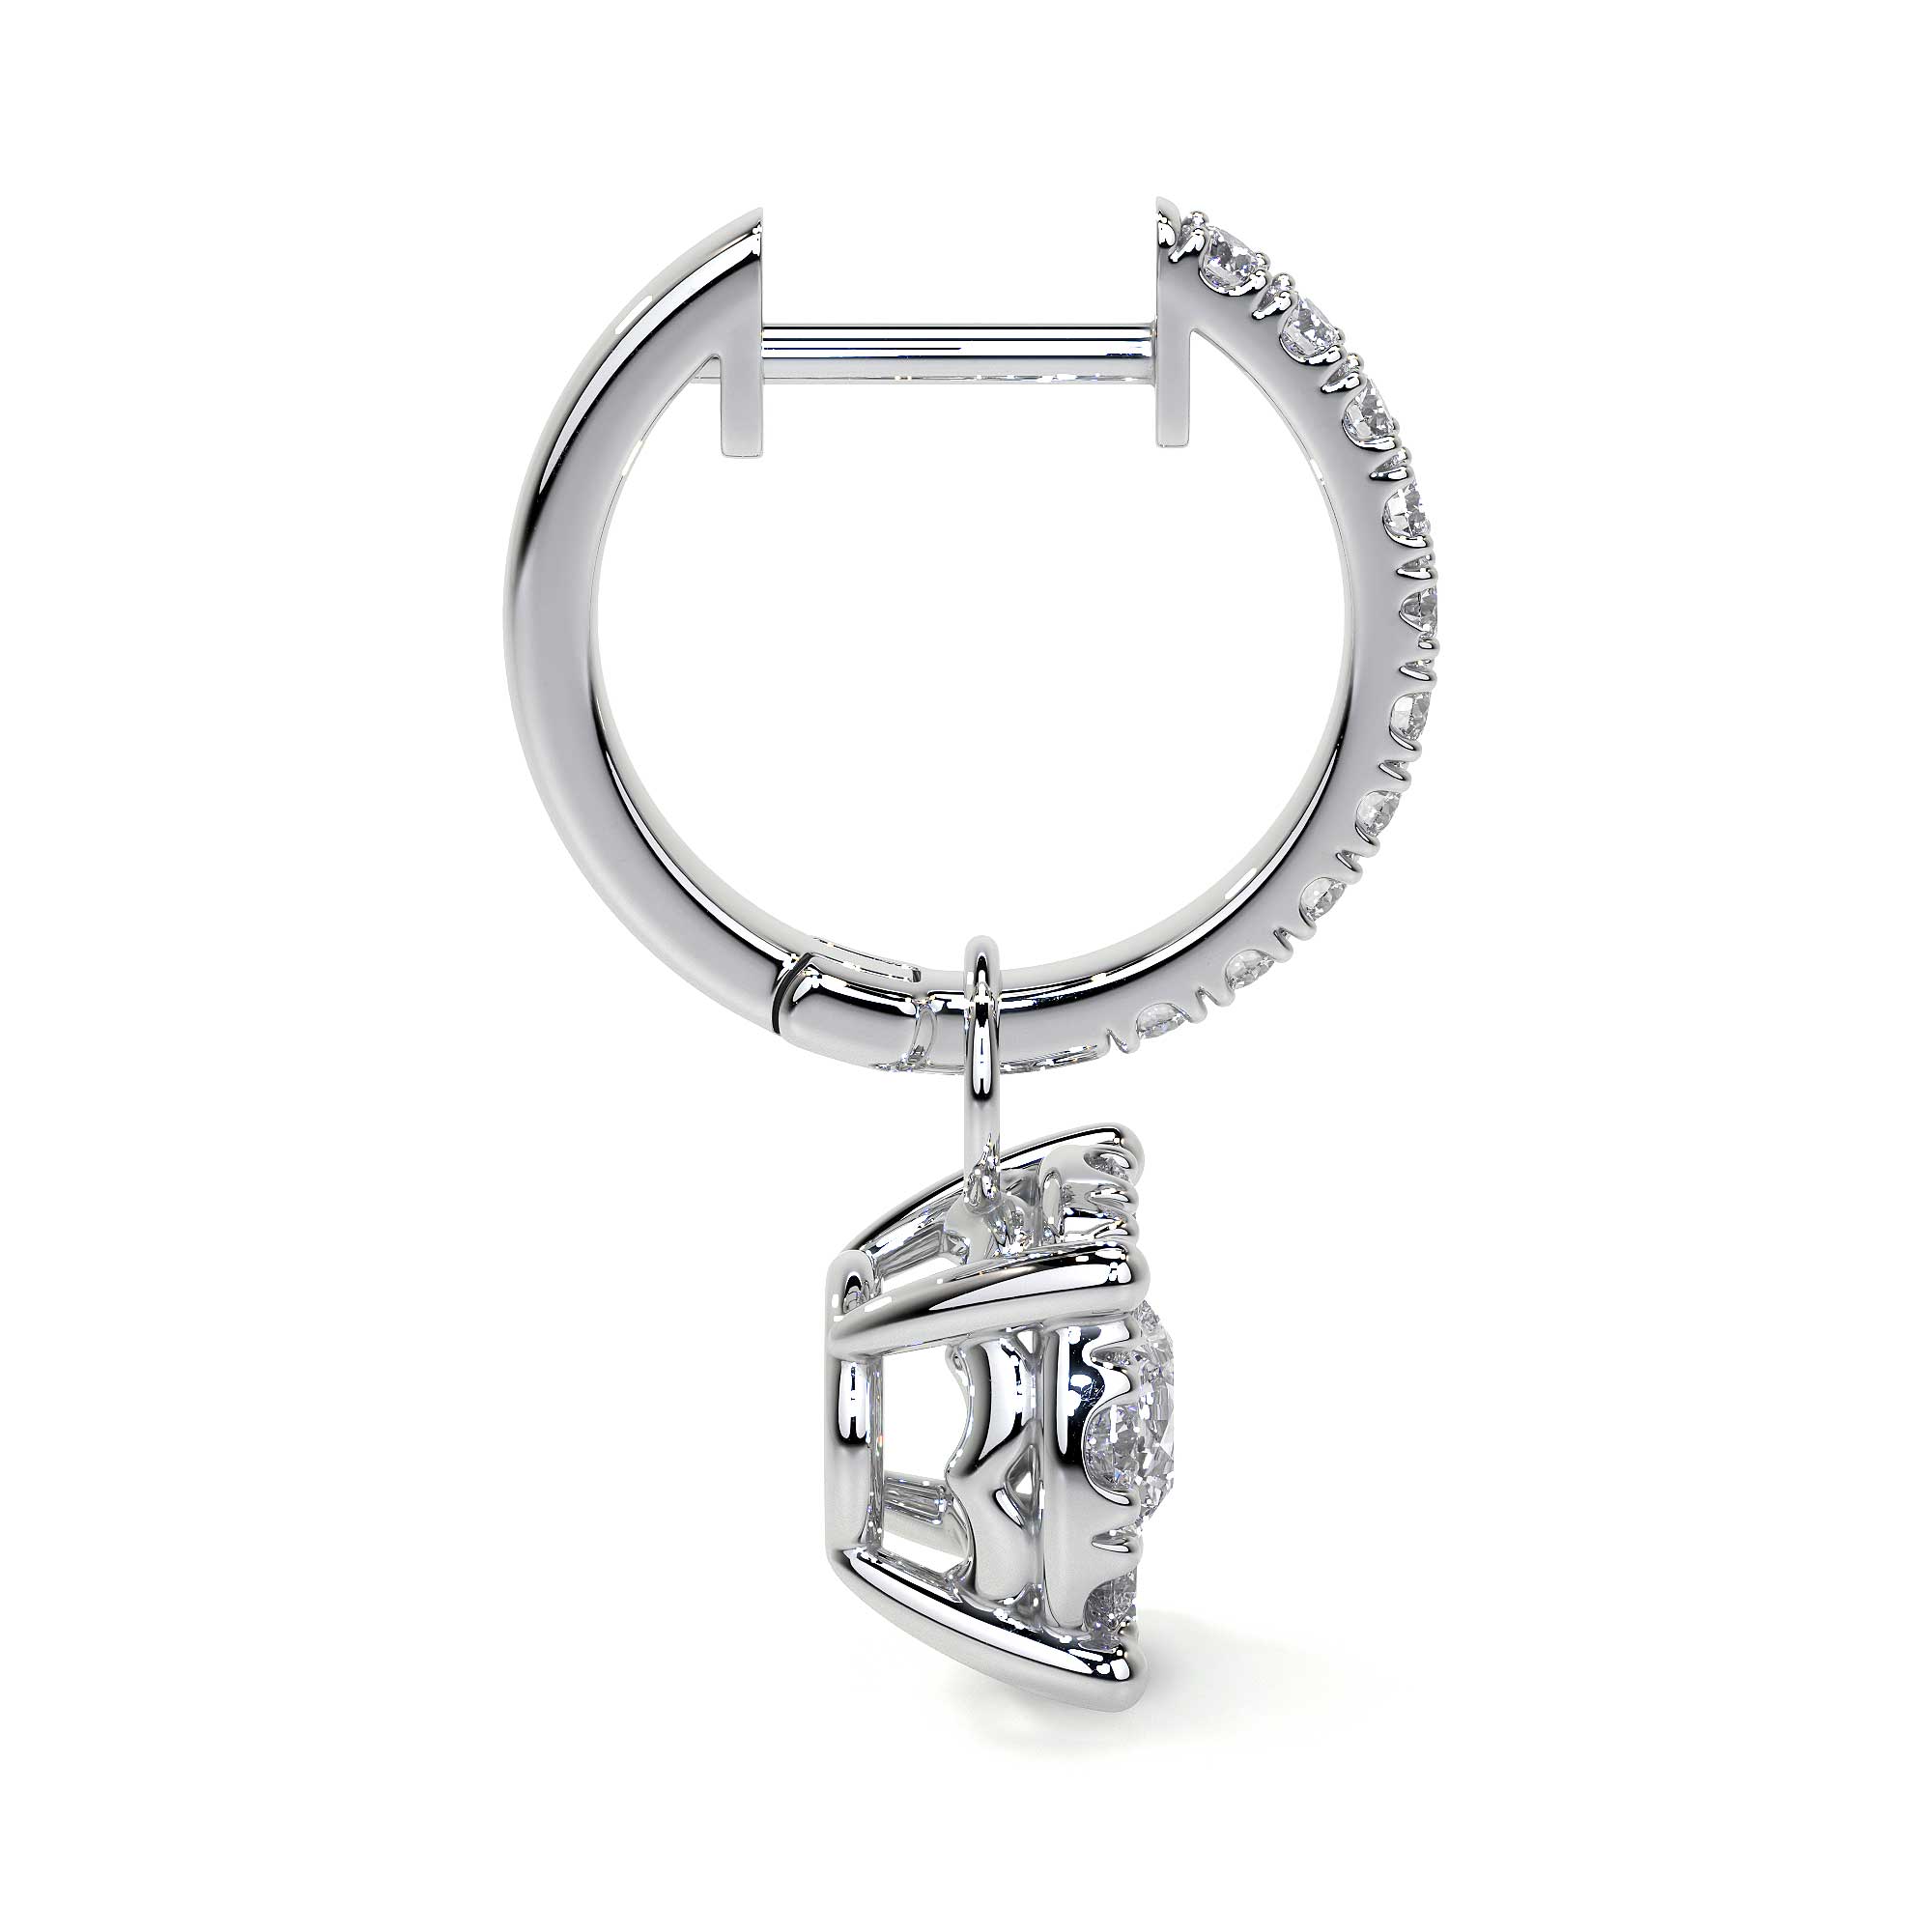 Dangling Round Diamond Earring - Earrings - Leviev Diamonds